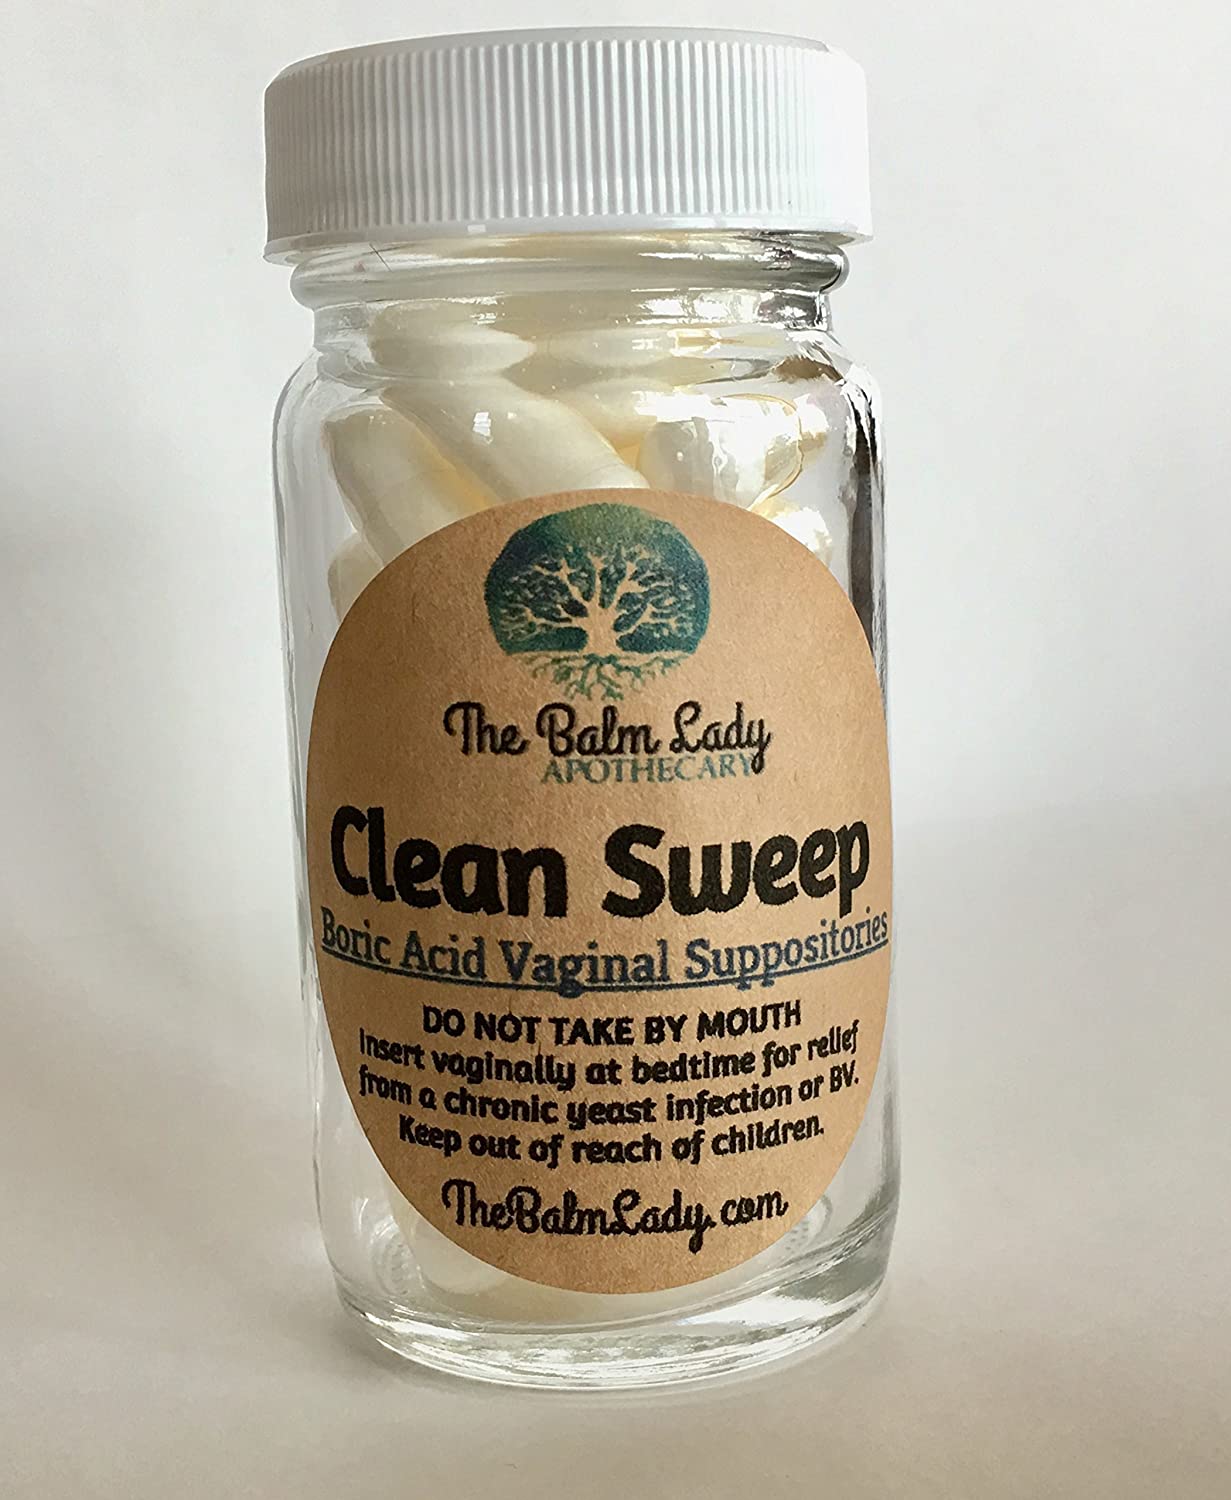 Amazon.com: Clean Sweep 30 Boric Acid Vaginal Suppositories